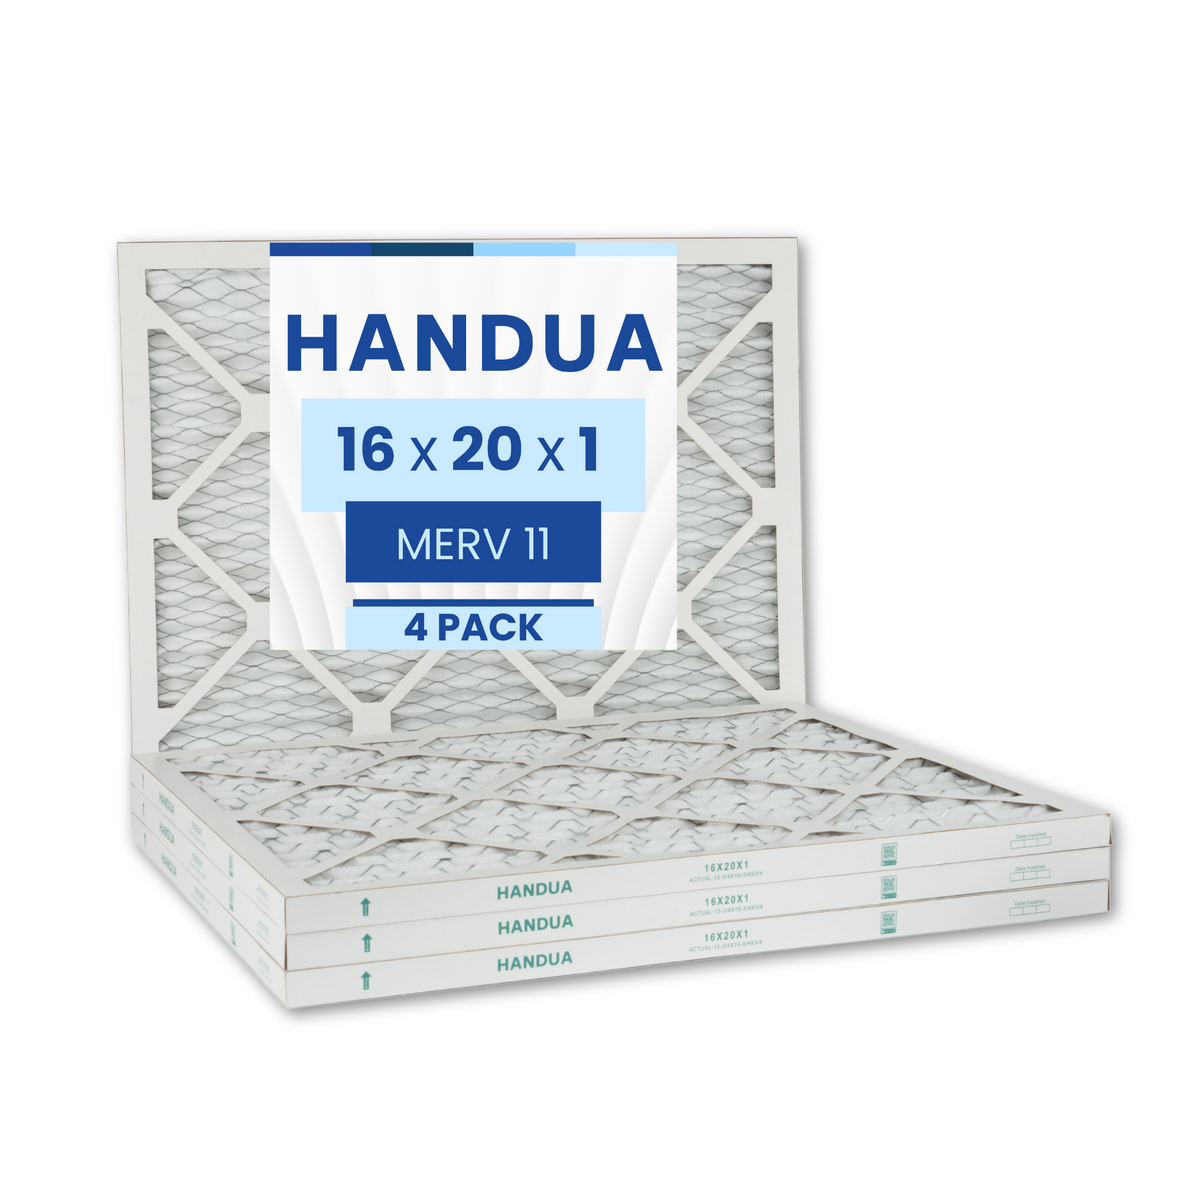 Handua 16x20x1 Air Filter MERV 11 Allergen Control, Plated Furnace AC Air Replacement Filter, 4 Pack (Actual Size: 15.75" x 19.75" x 0.75")